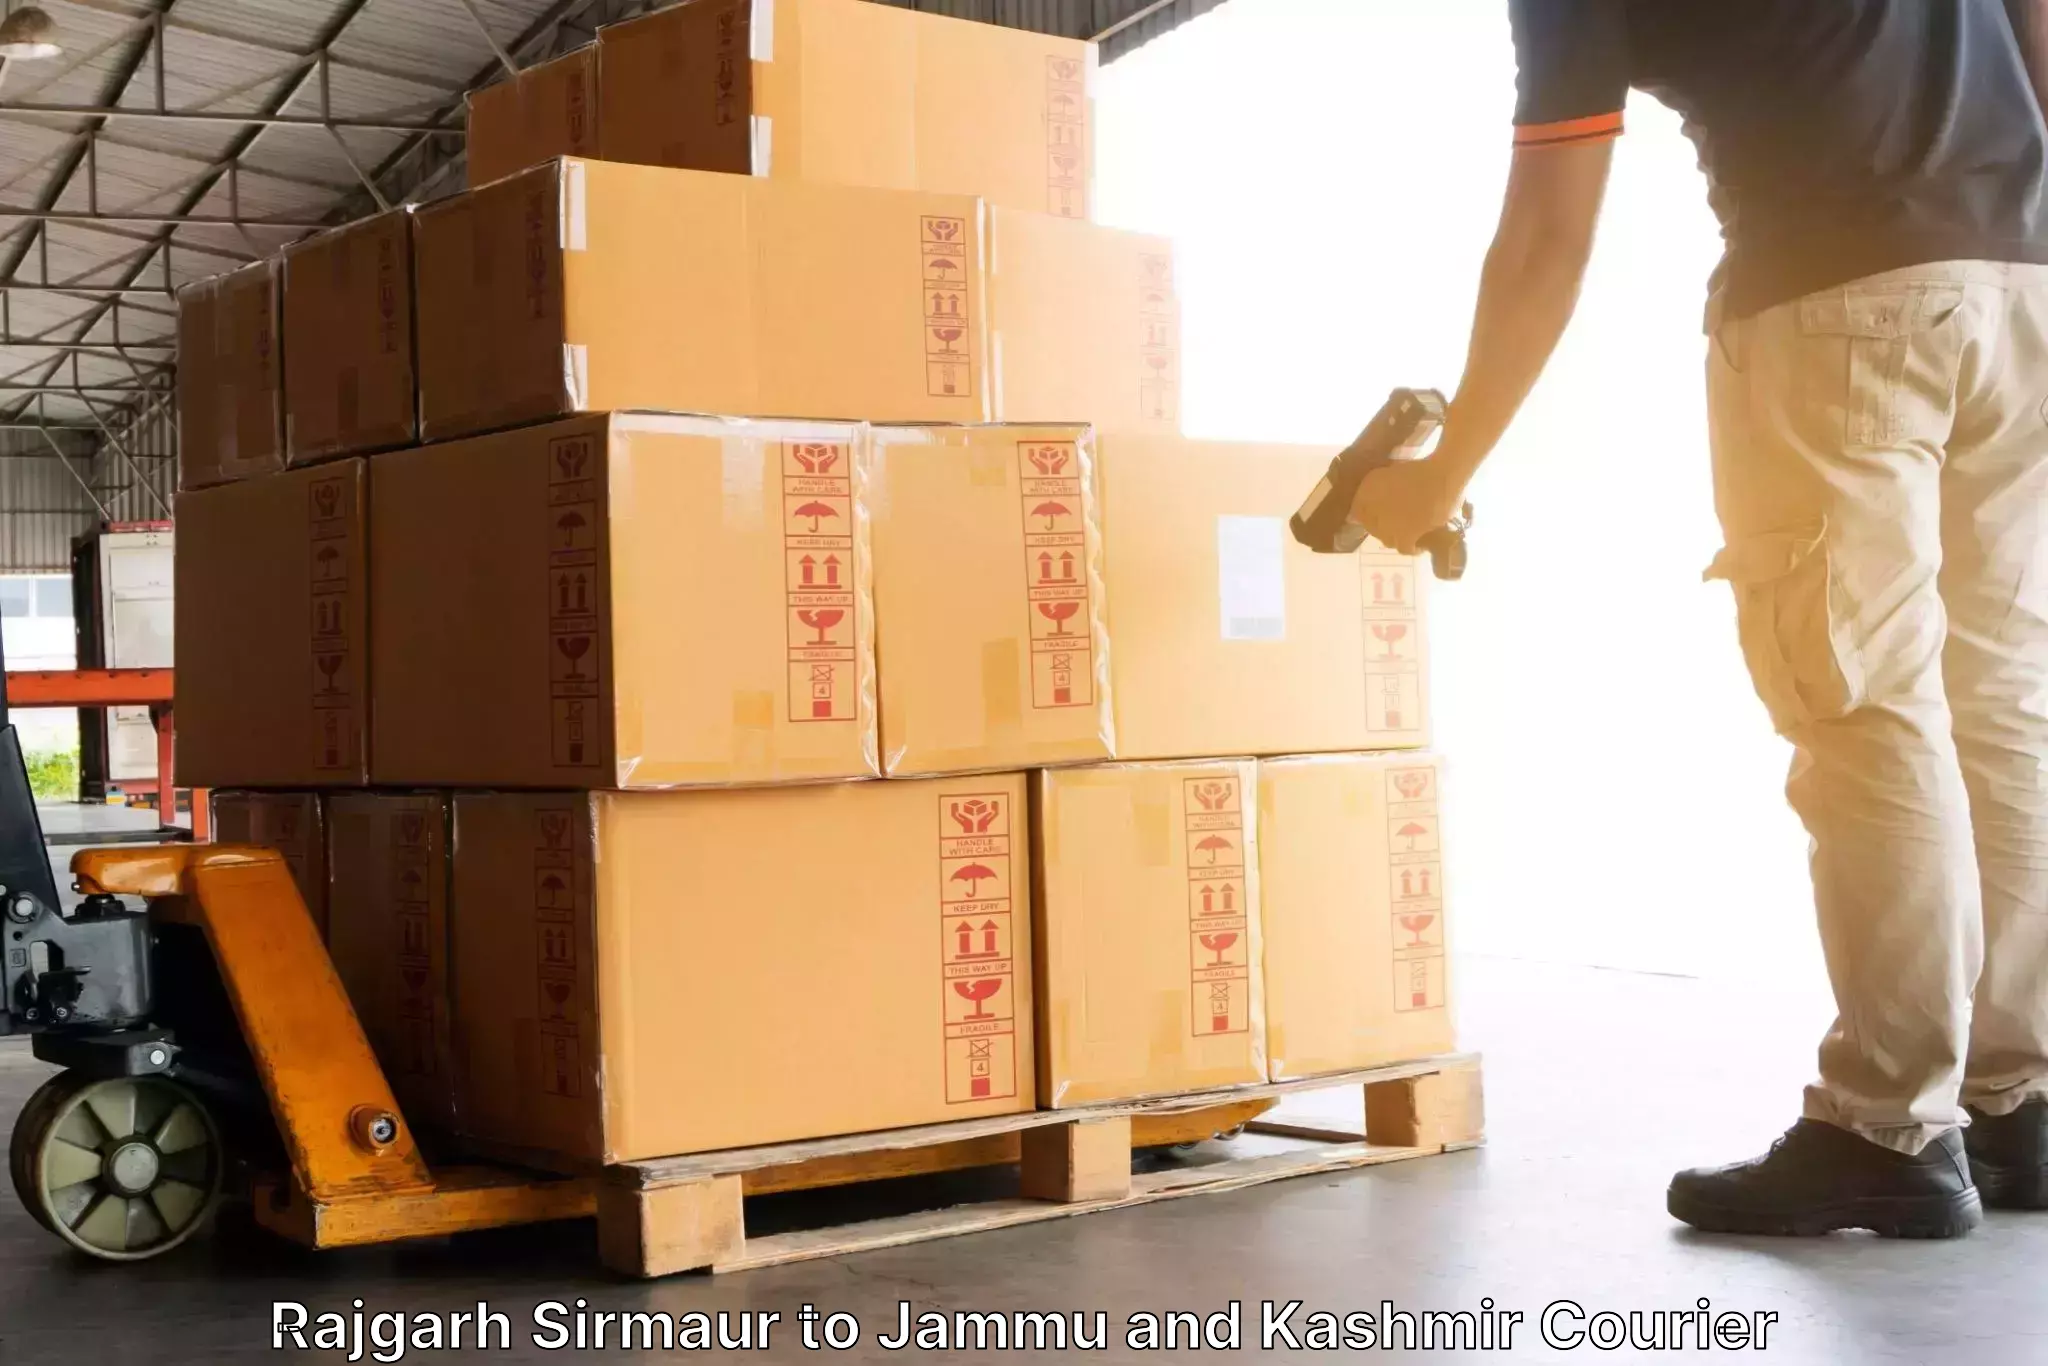 Courier service innovation Rajgarh Sirmaur to Katra